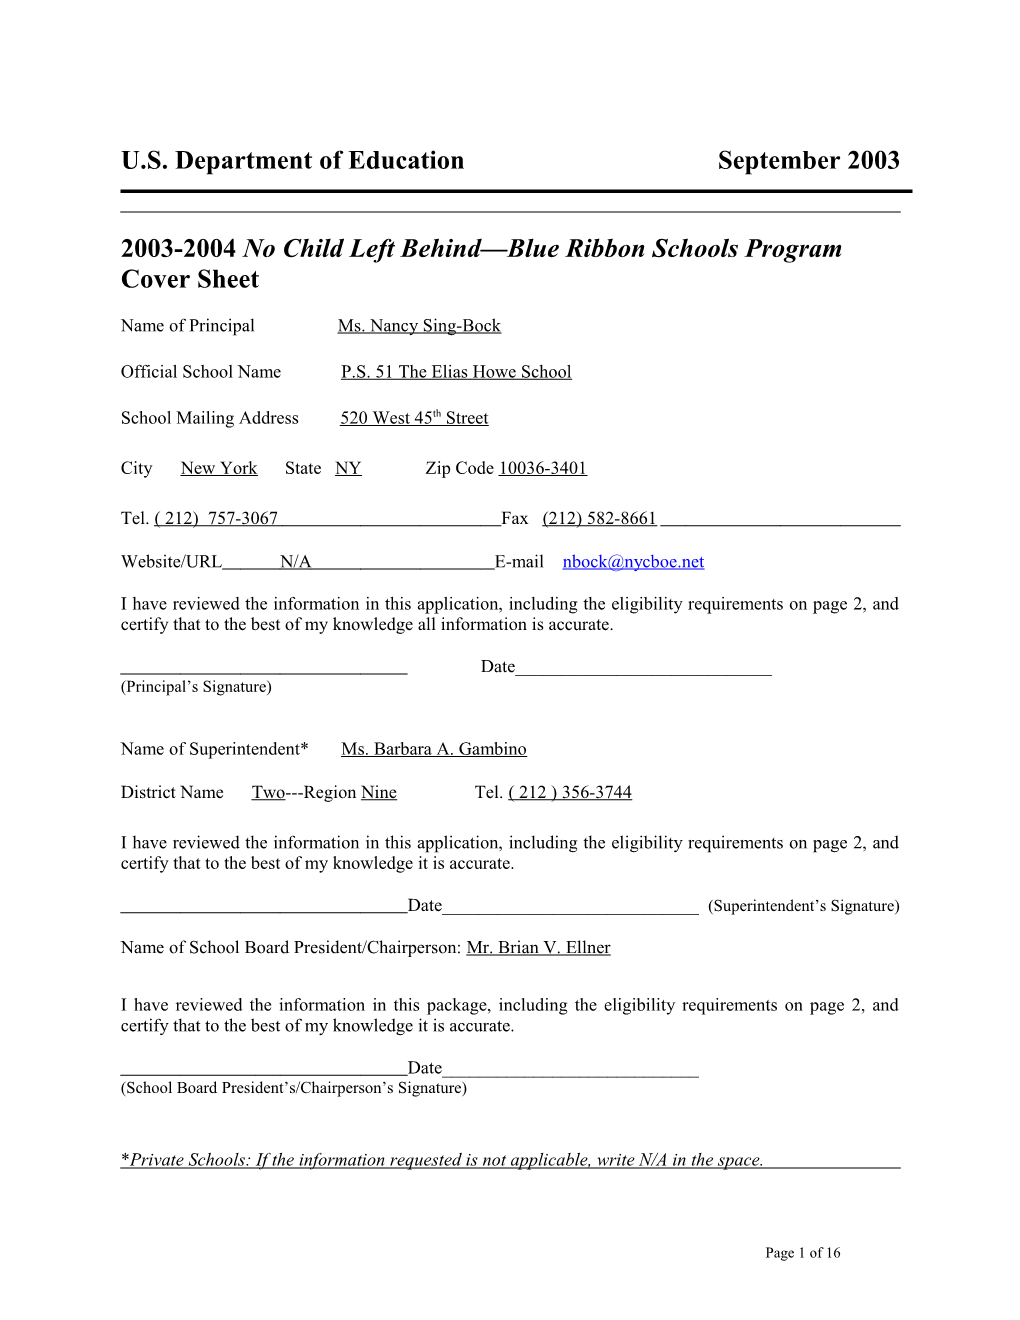 P.S. 51 the Elias Howe School 2004 No Child Left Behind-Blue Ribbon School Application (Msword)